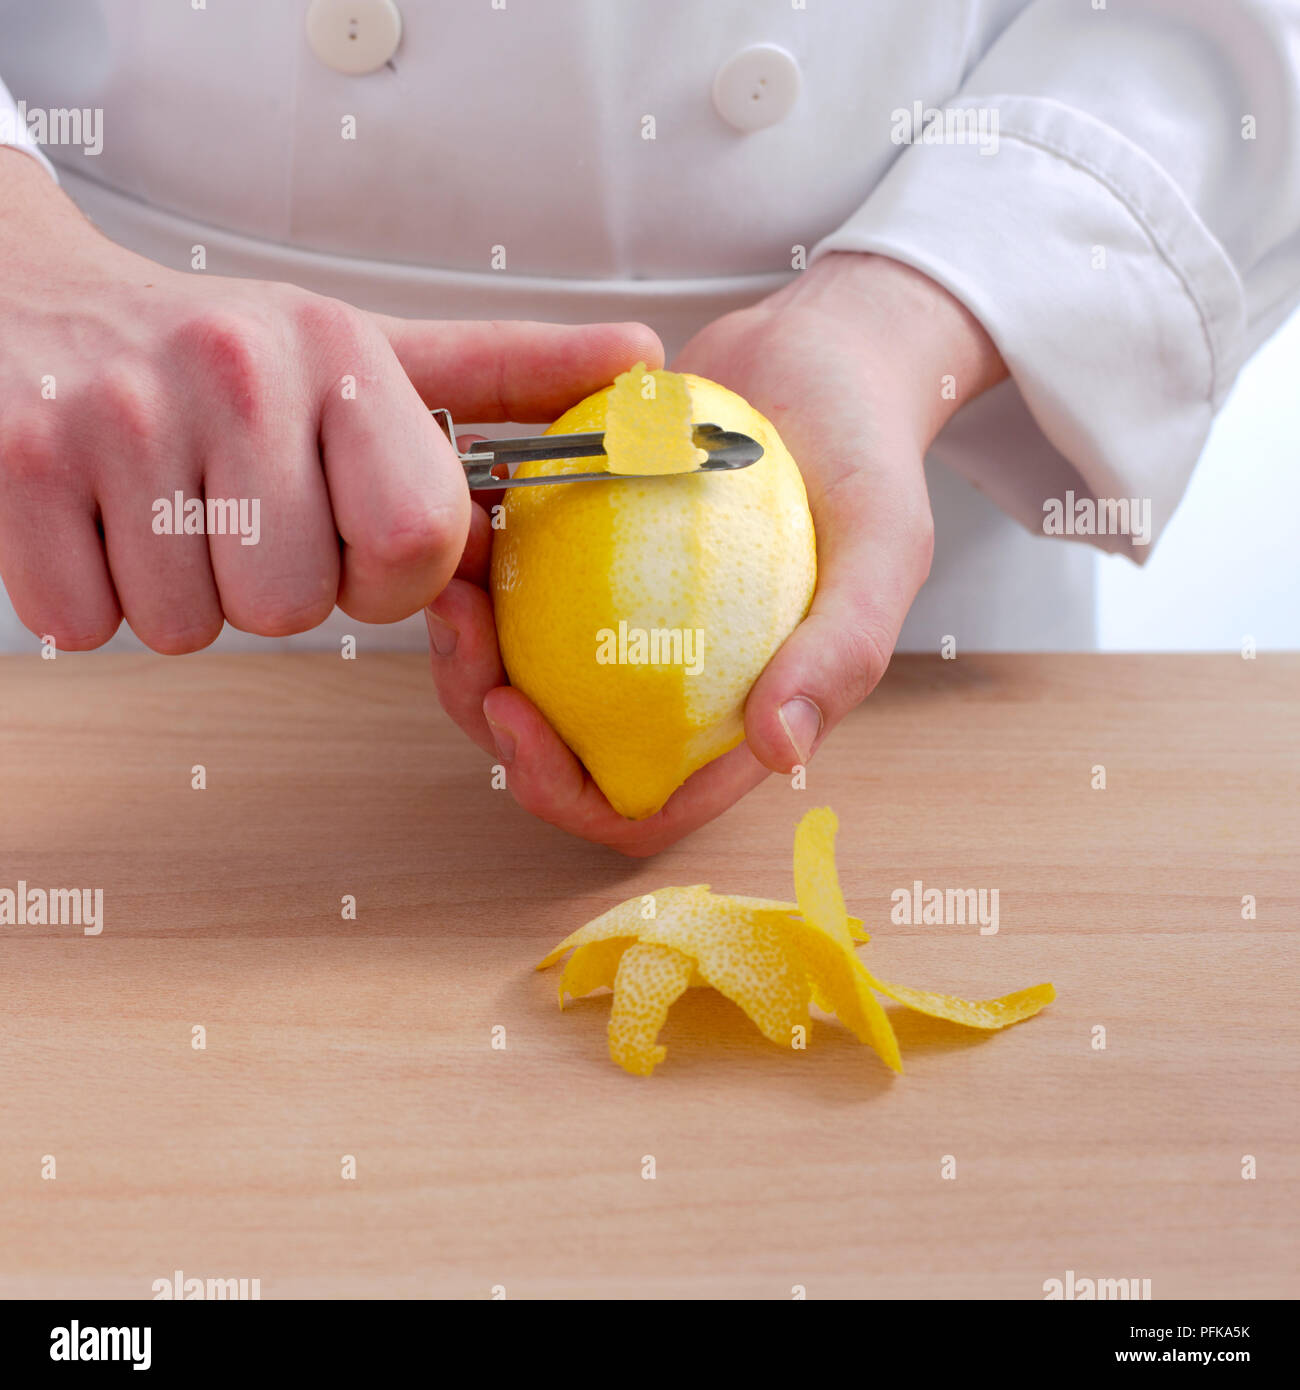 https://c8.alamy.com/comp/PFKA5K/hand-holding-peeler-and-lemon-peeling-off-lemon-zest-close-up-PFKA5K.jpg